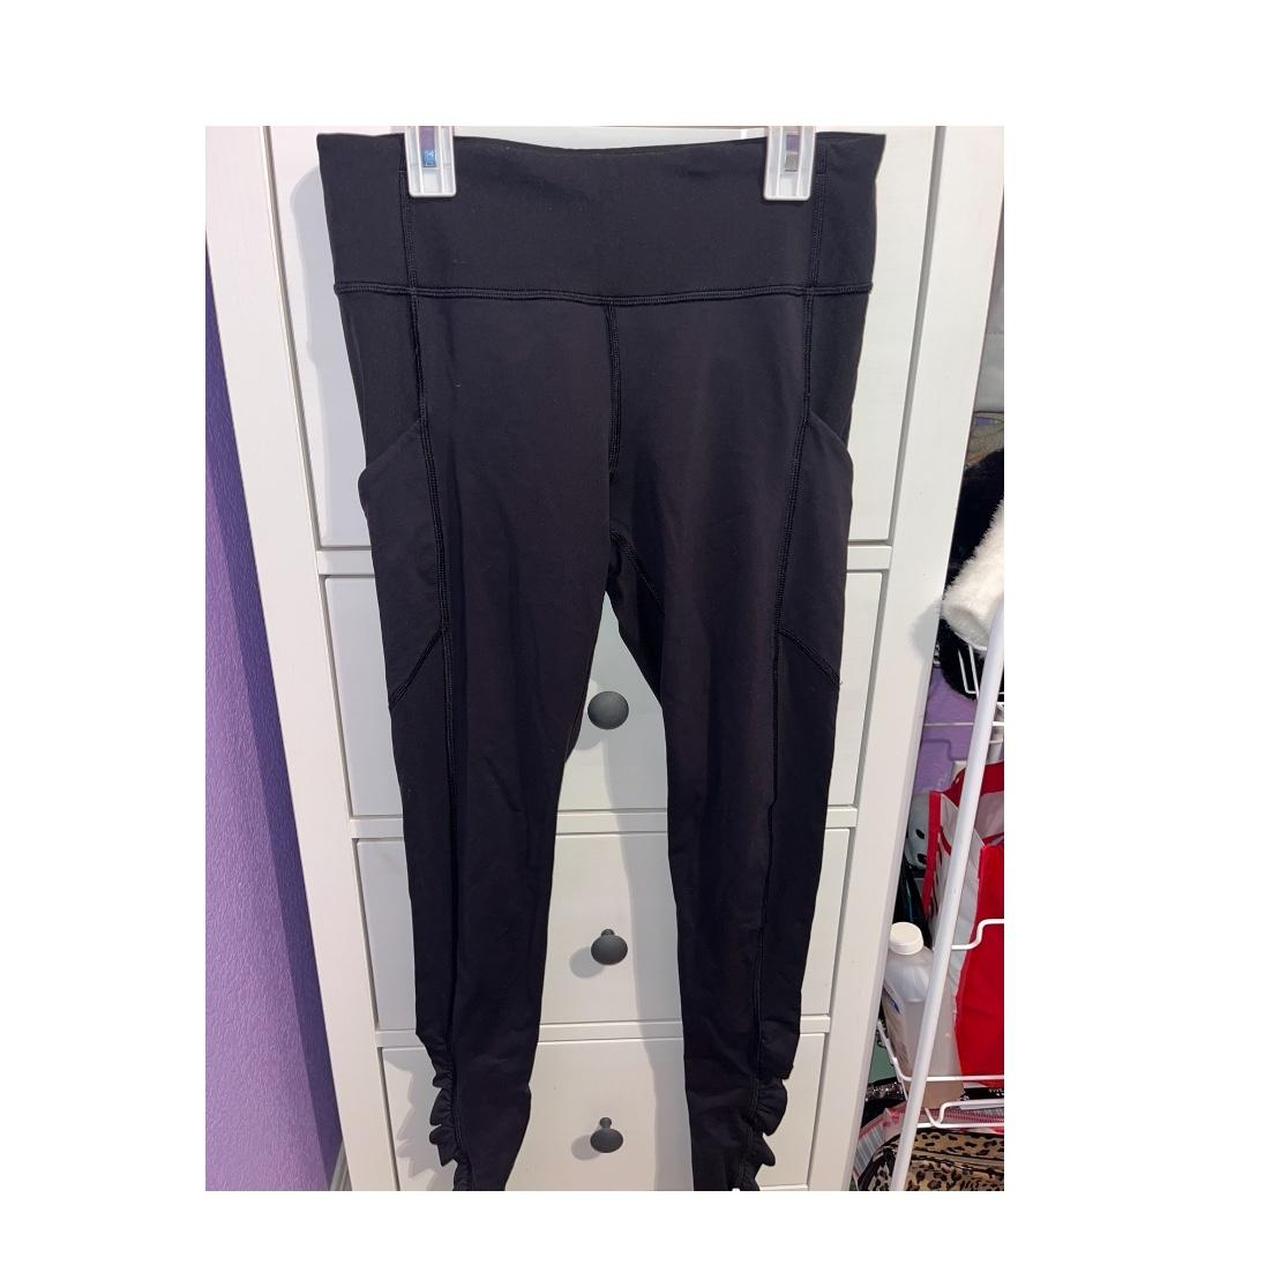 black lululemon race leggings w pockets on the side - Depop